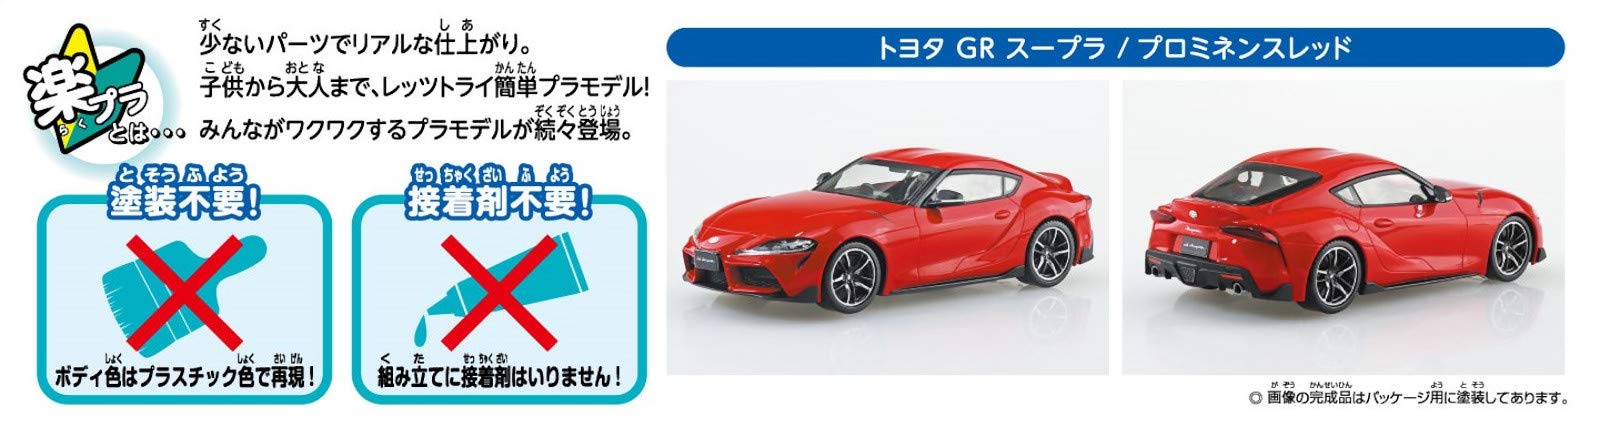 AOSHIMA The Snap Kit 1/32 Toyota Gr Supra Prominence Rot Plastikmodell